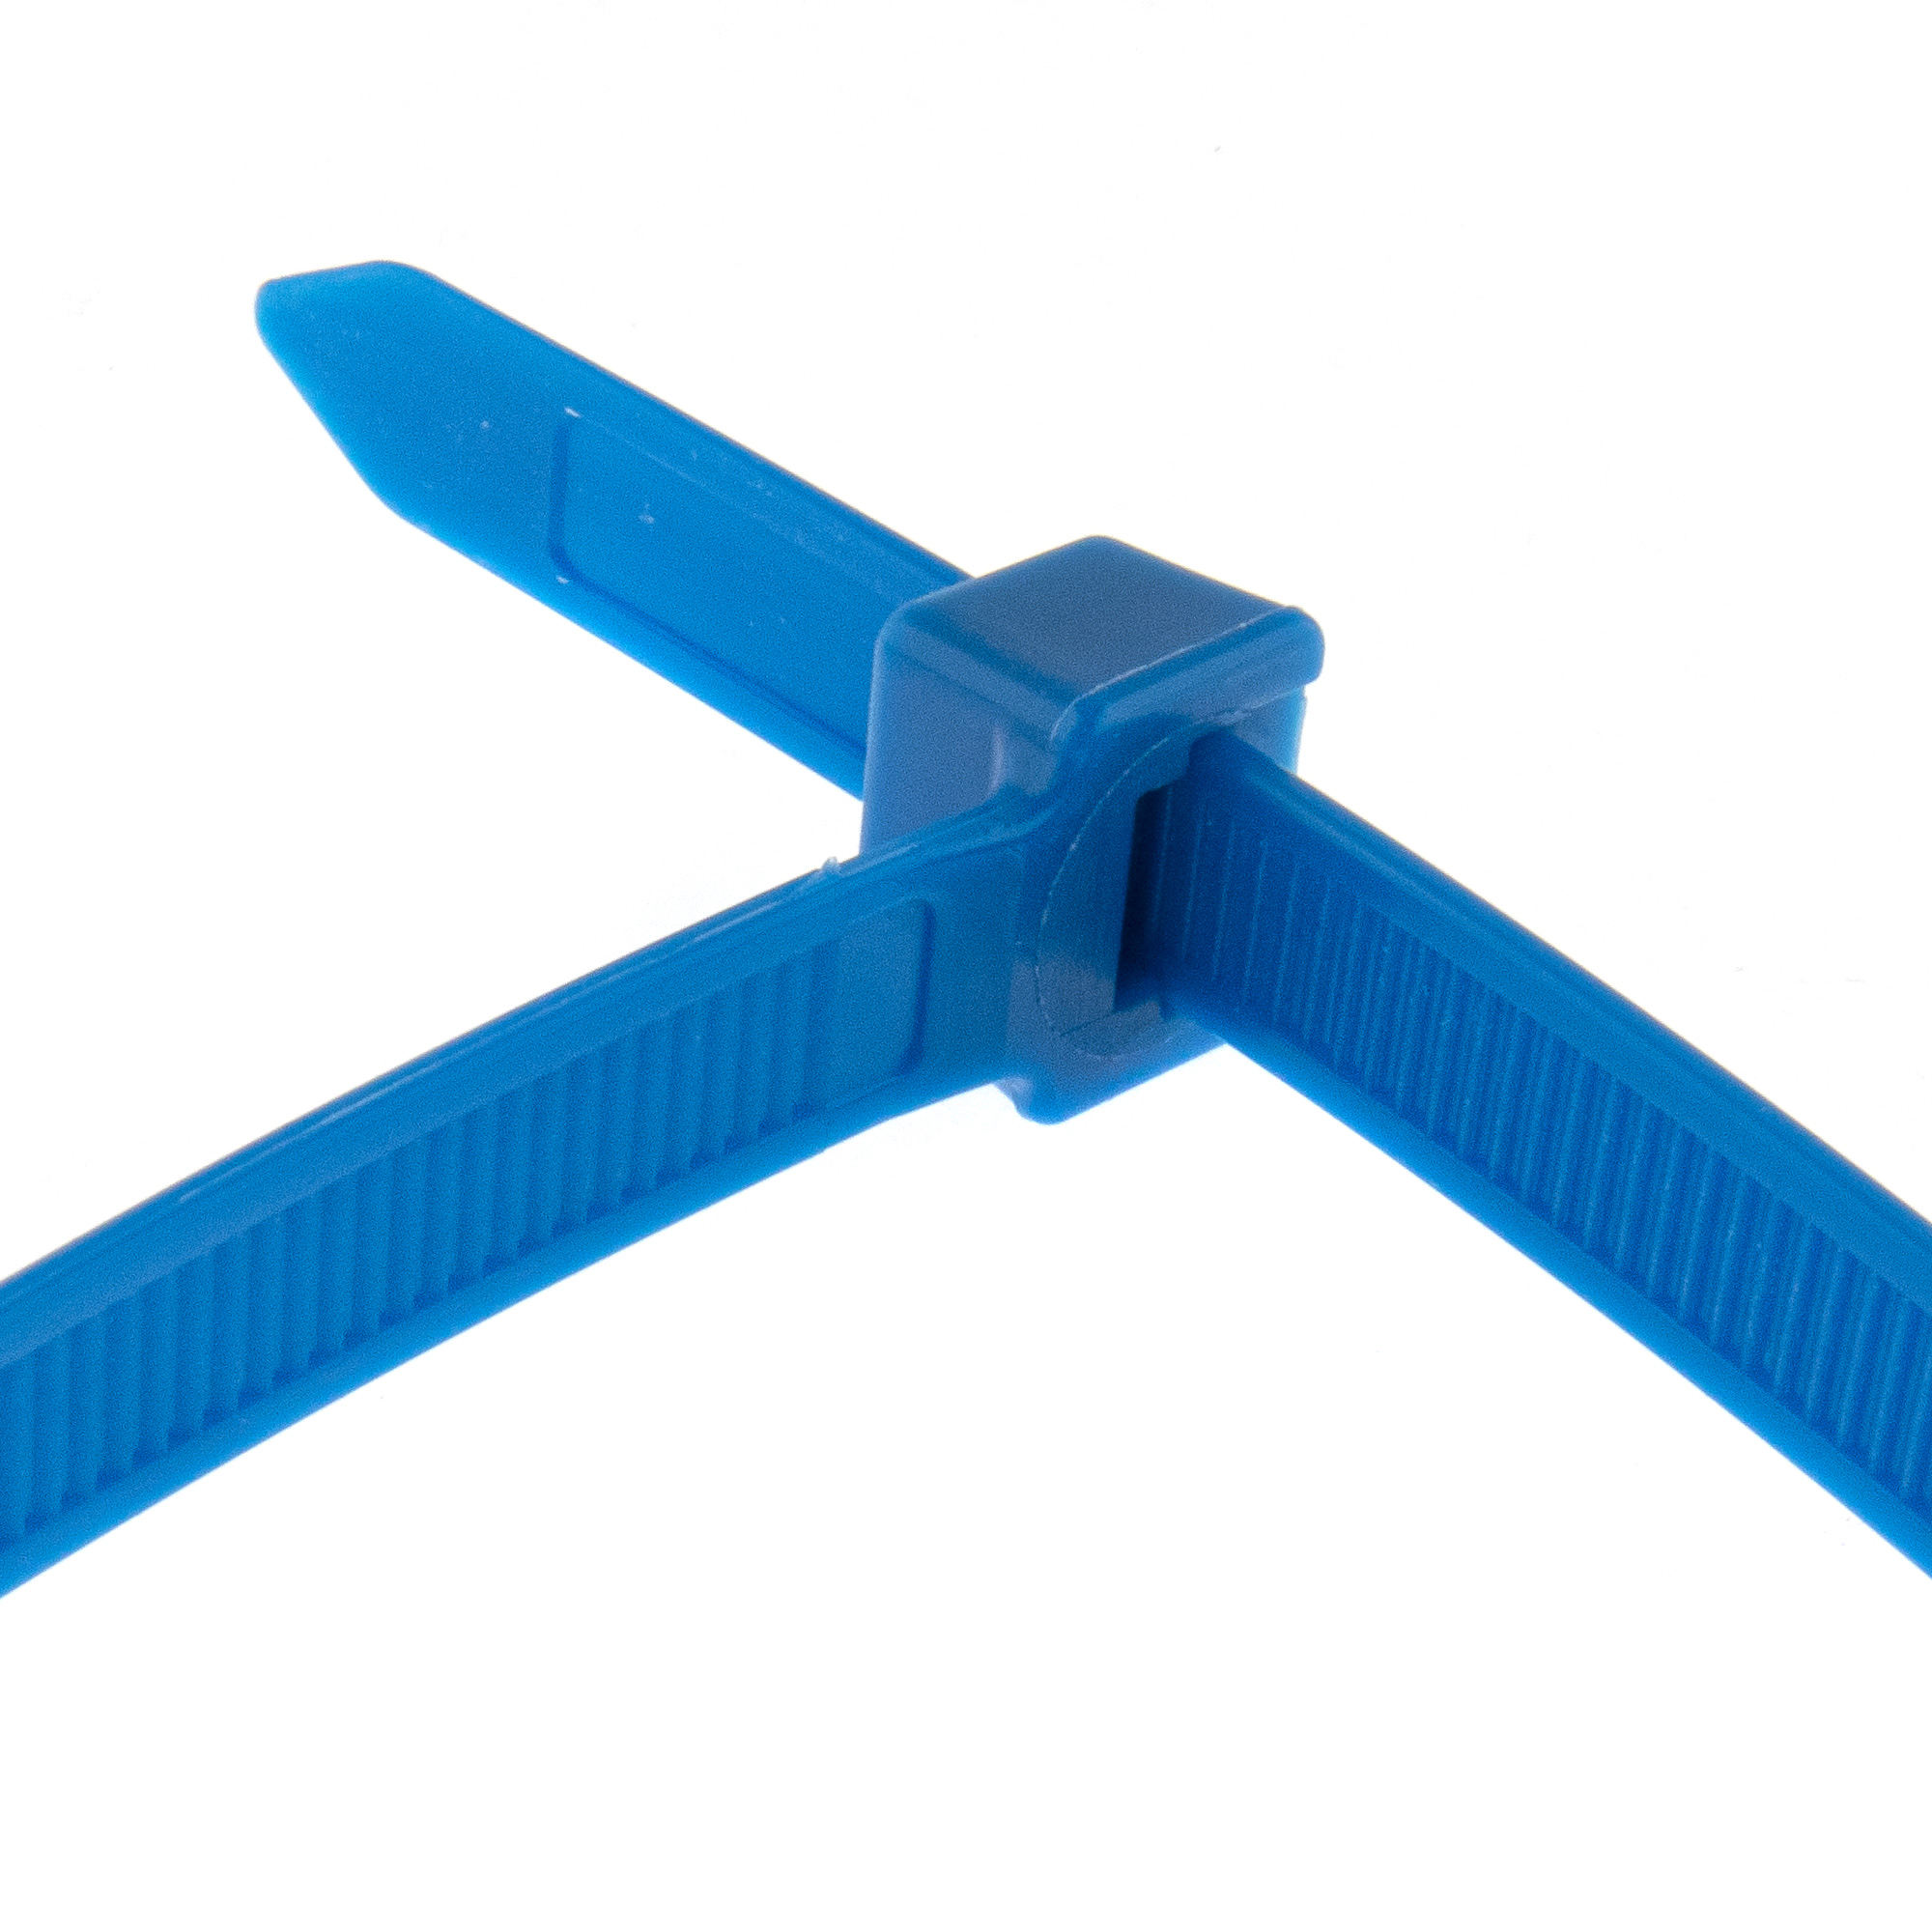 Cable tie self-locking 430 x 9,0mm, blue, 100PCS